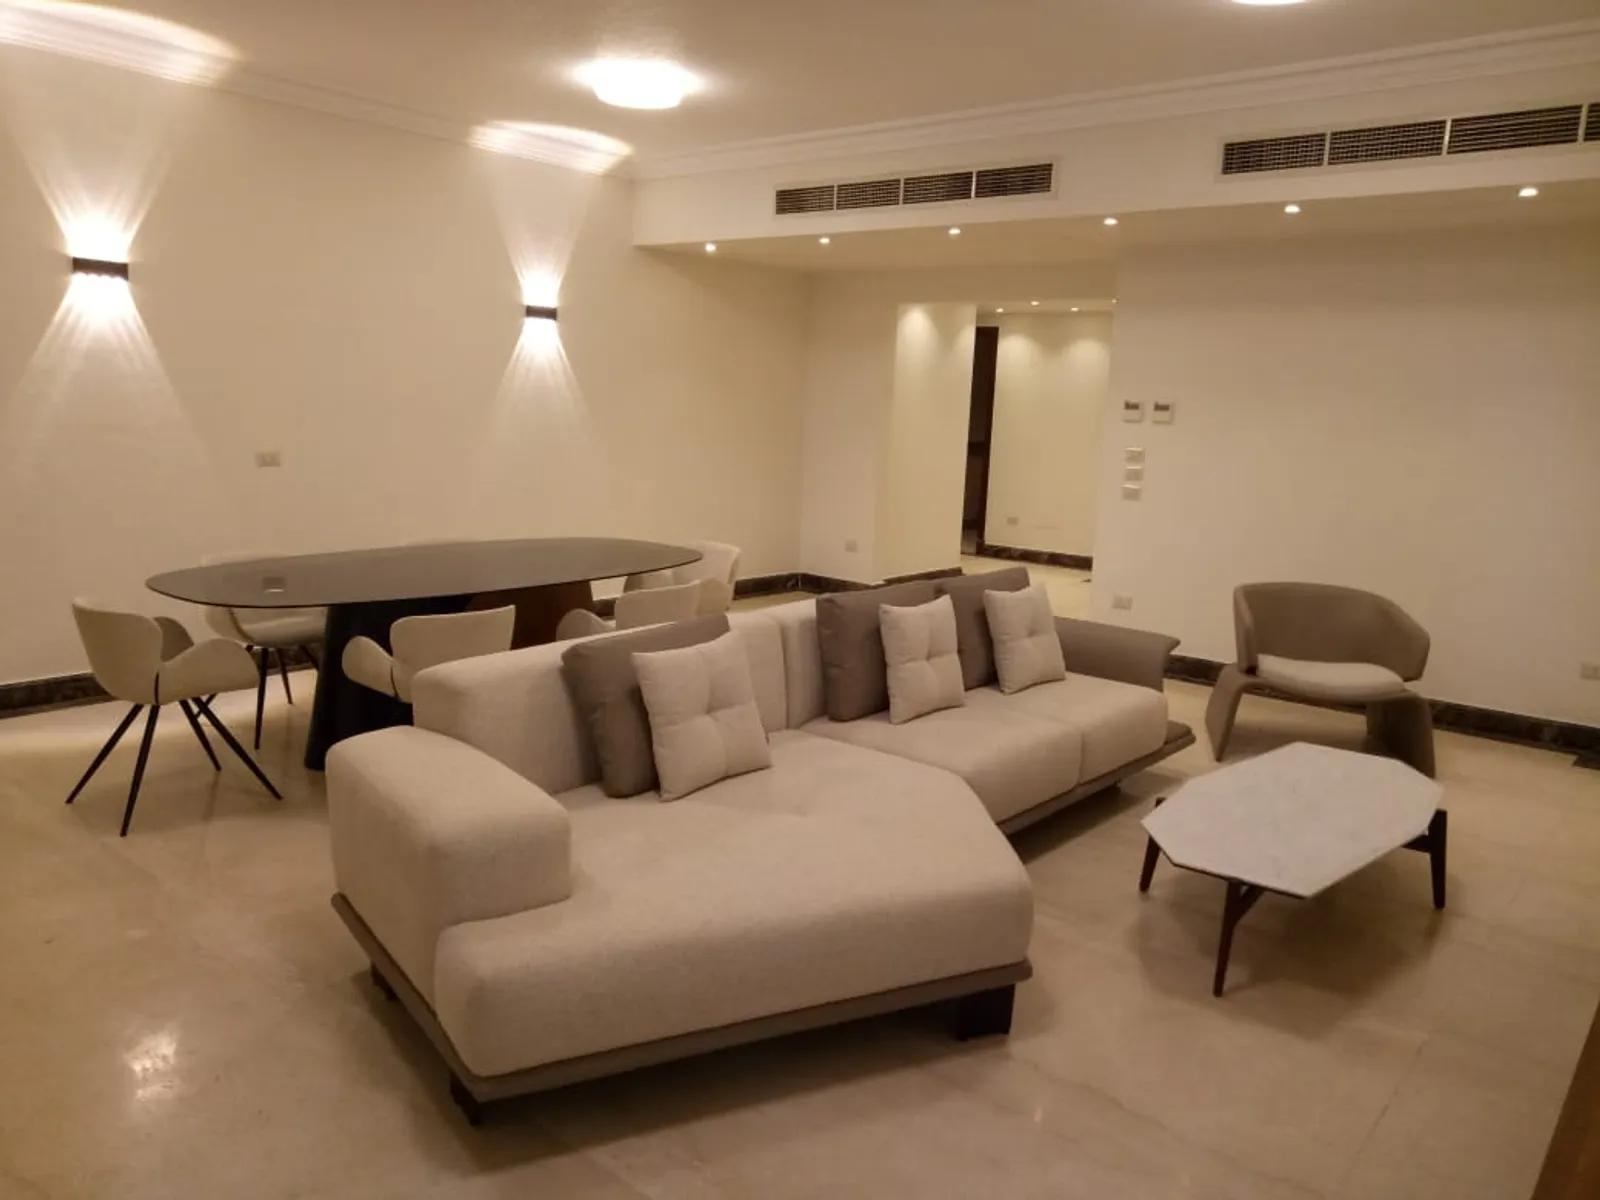 Ground Floors For Sale In Maadi Maadi Sarayat Area: 290 m² consists of 3 Bedrooms 3 Bathrooms Modern furnished 5 stars #5784